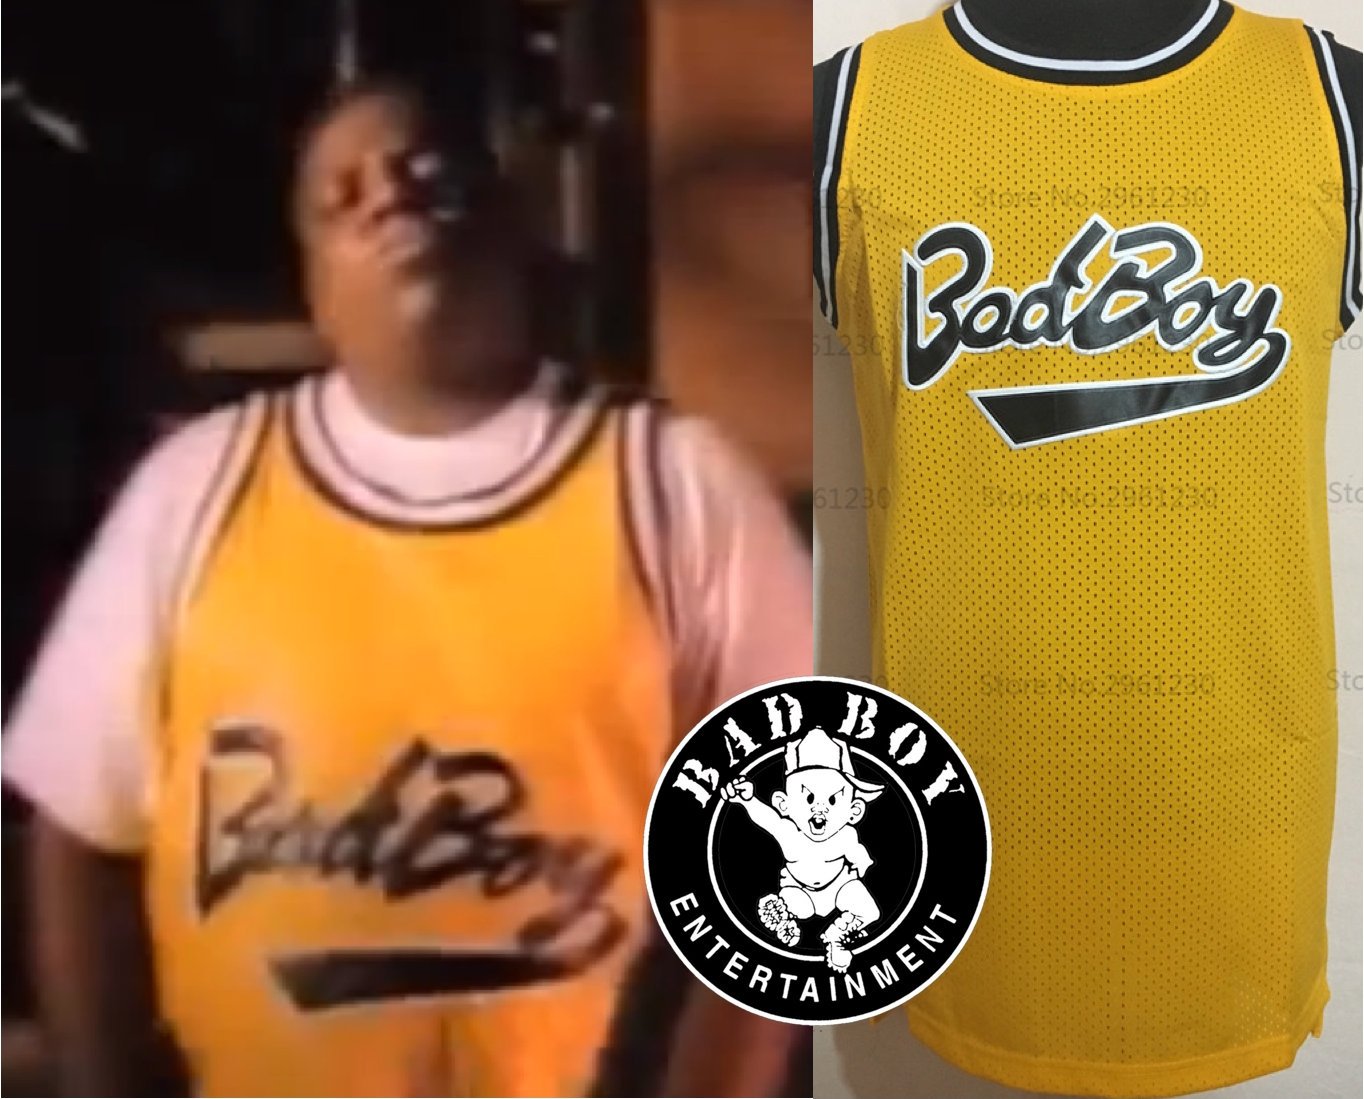 1993 Biggie smalls juicy jersey 🔥